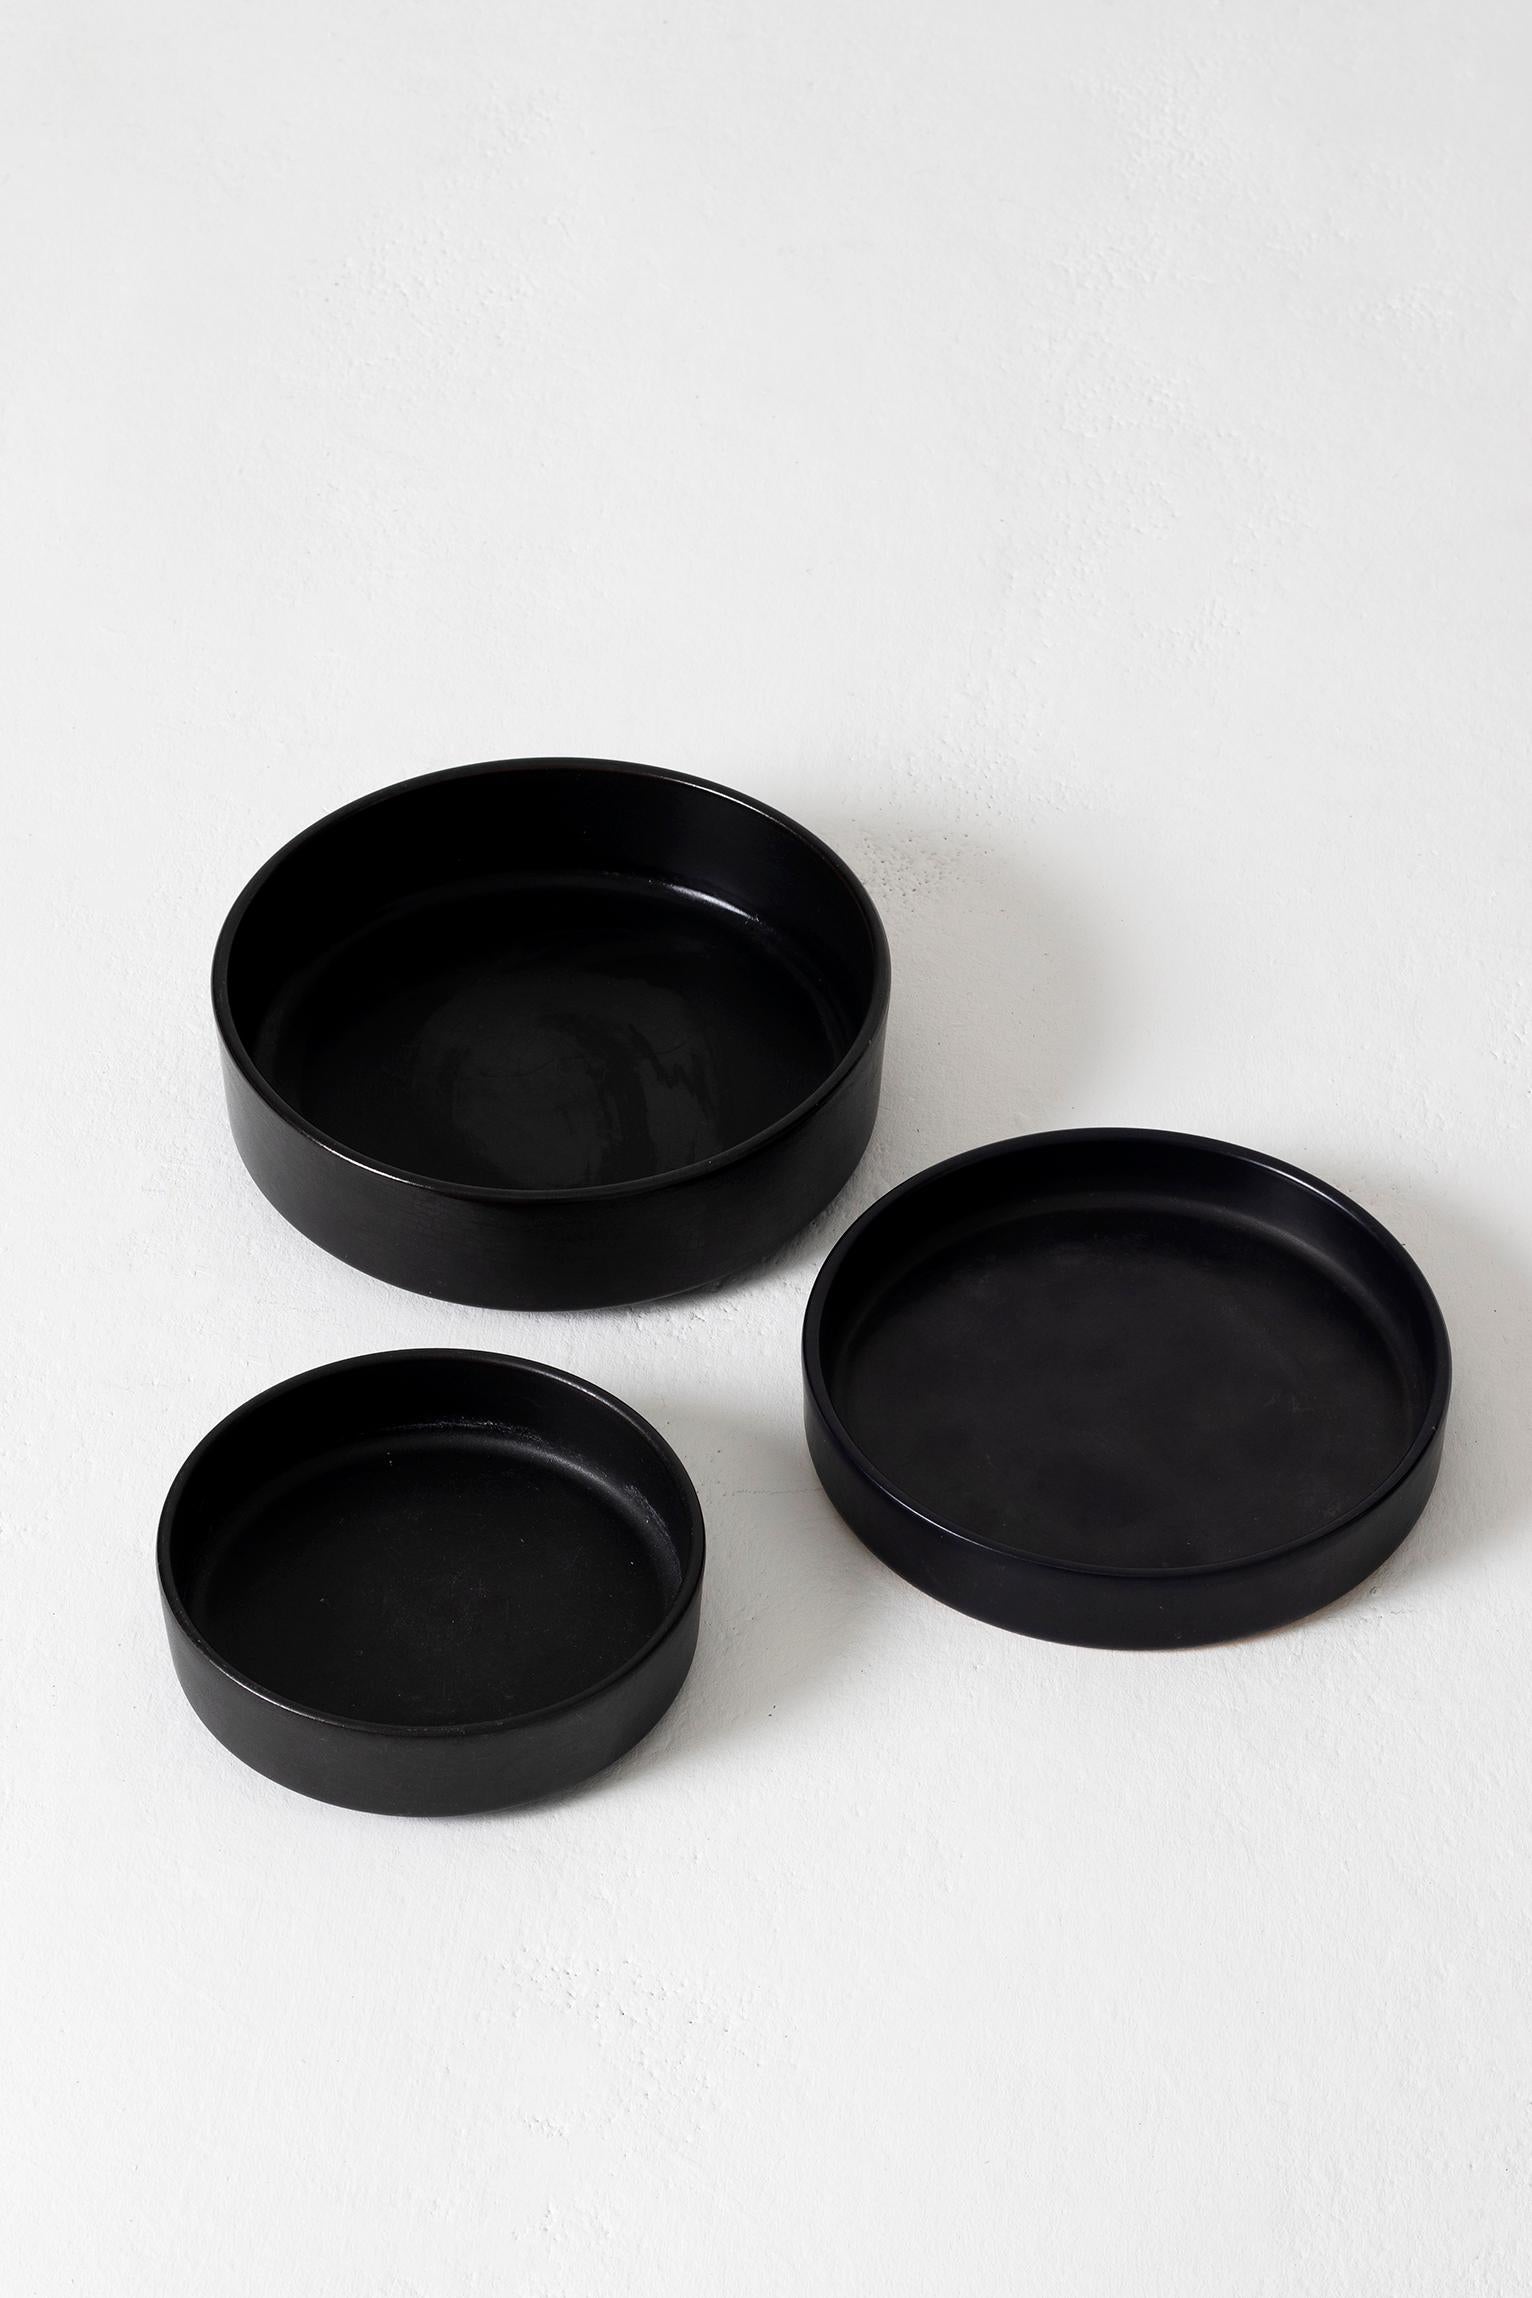 A set of three black ceramic bowls.
France, 1950s.